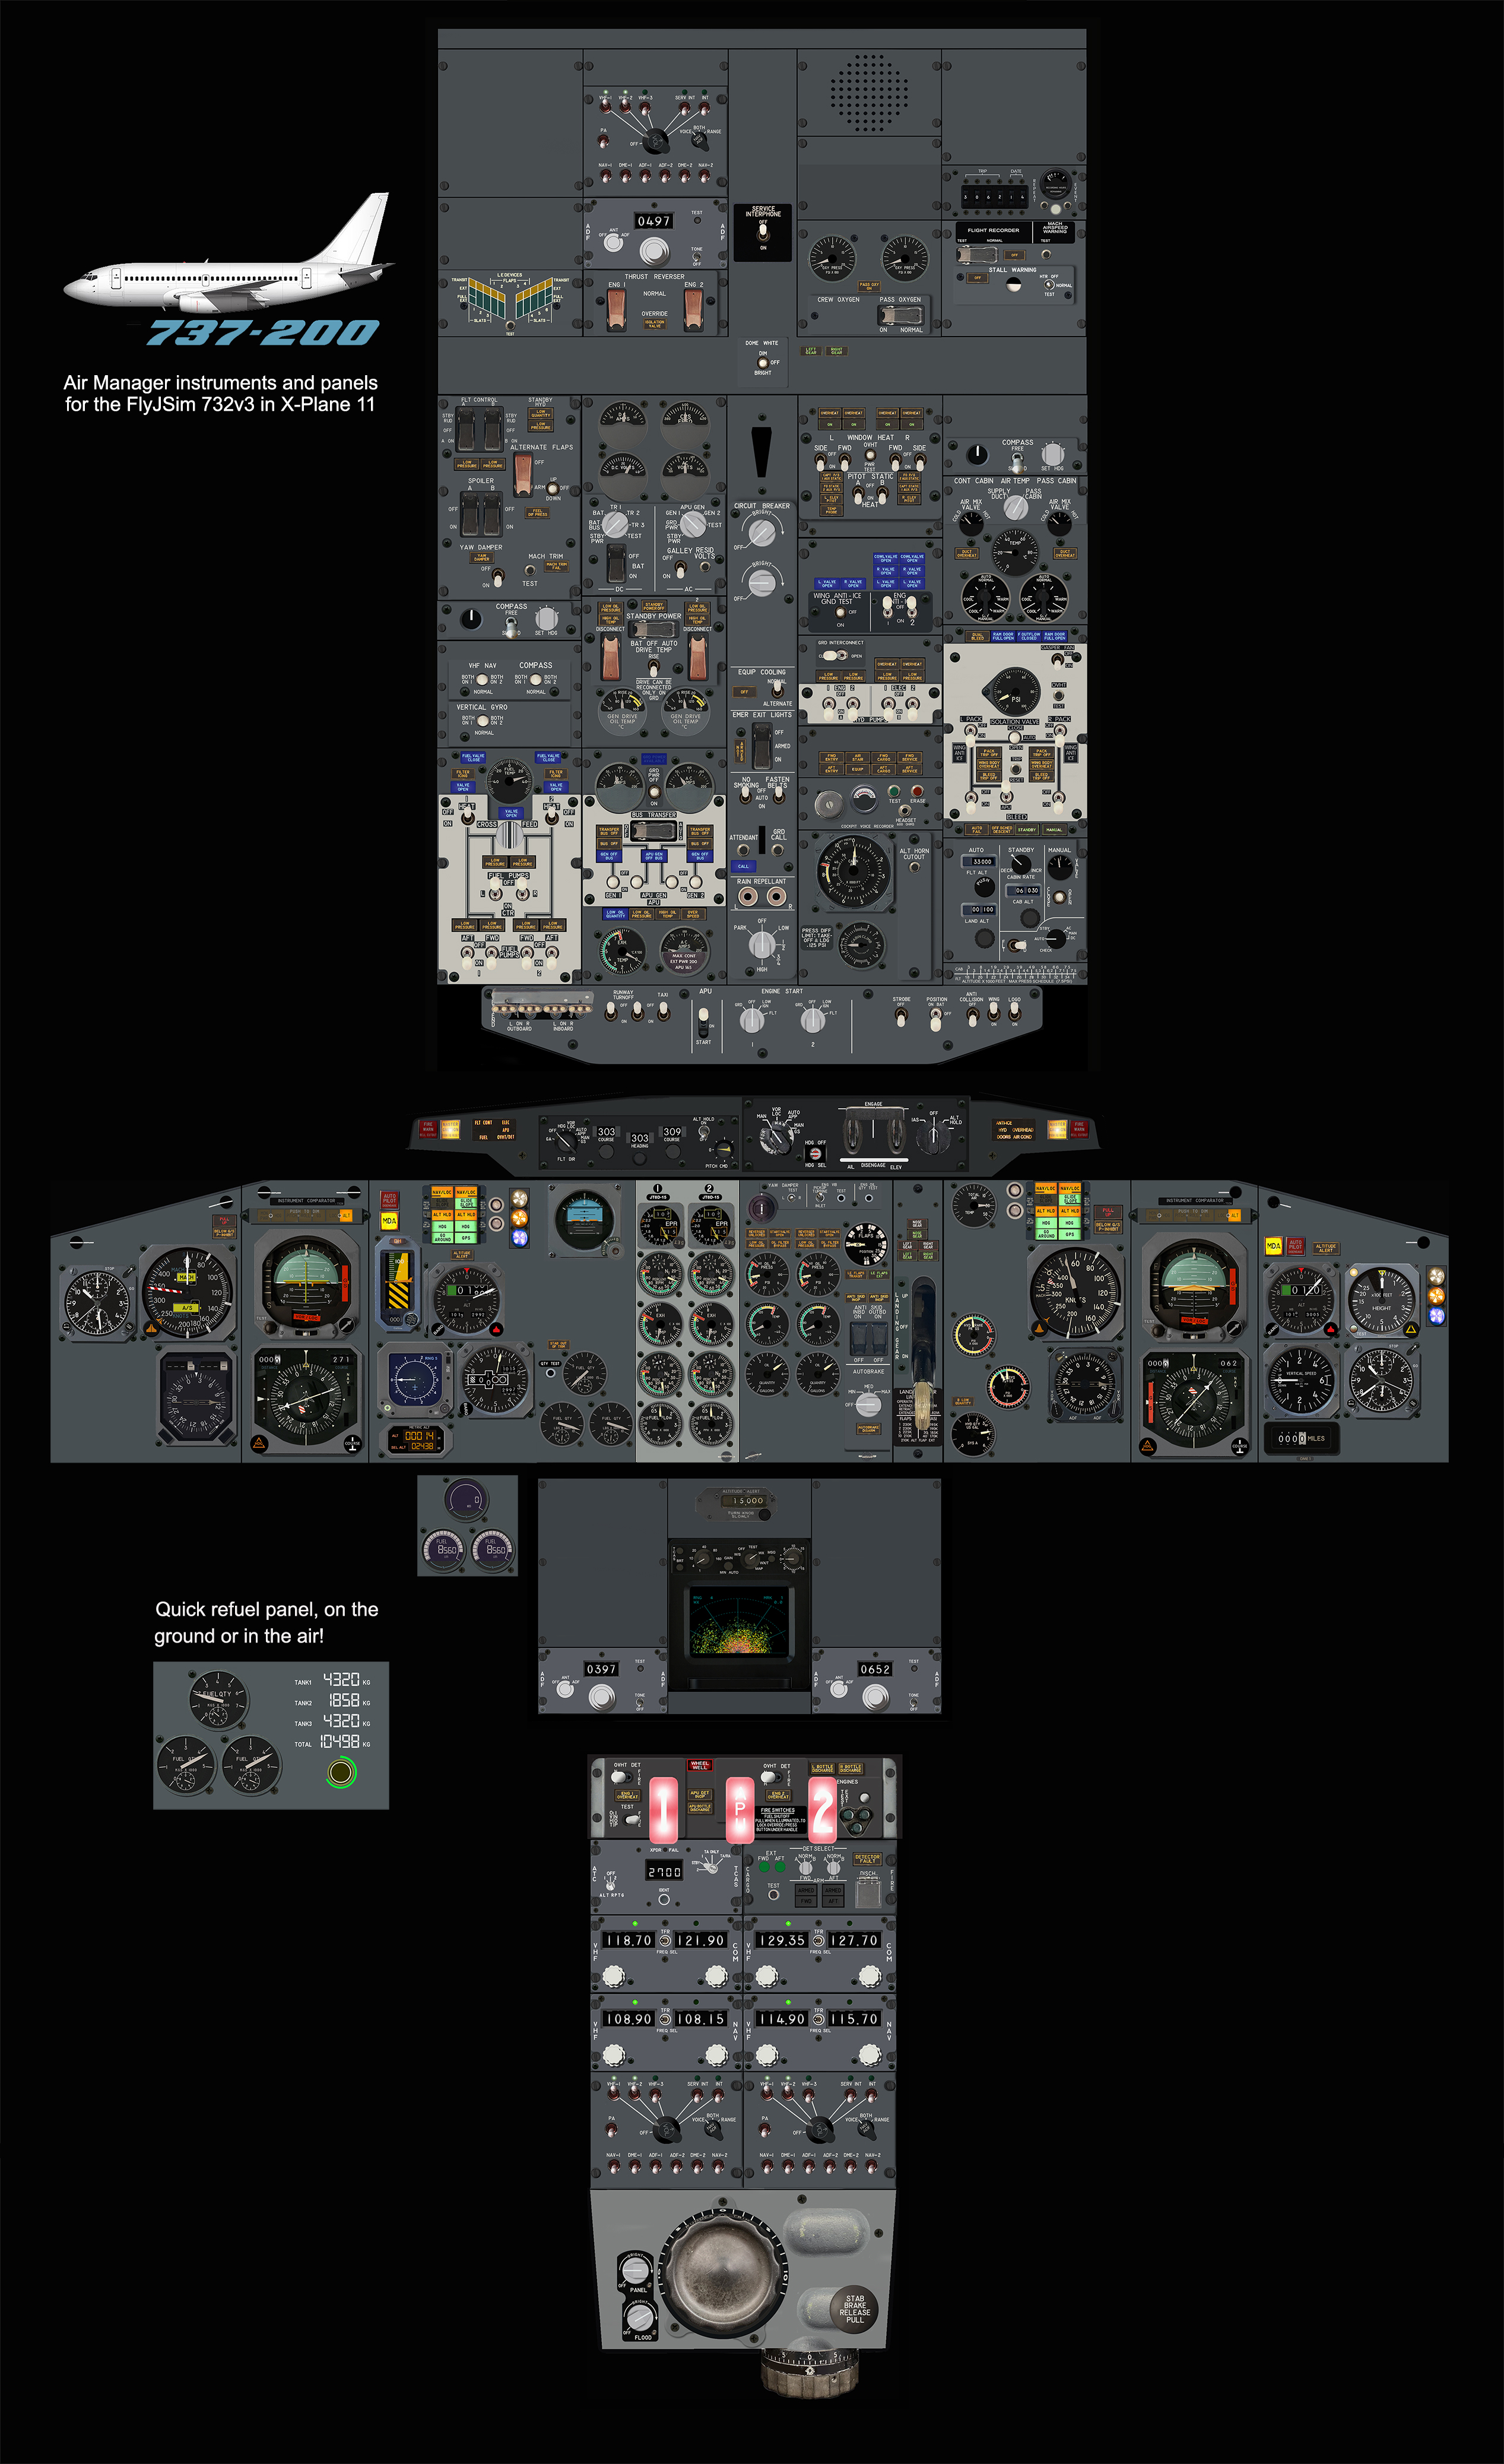 B737-200 Cockpit Overview